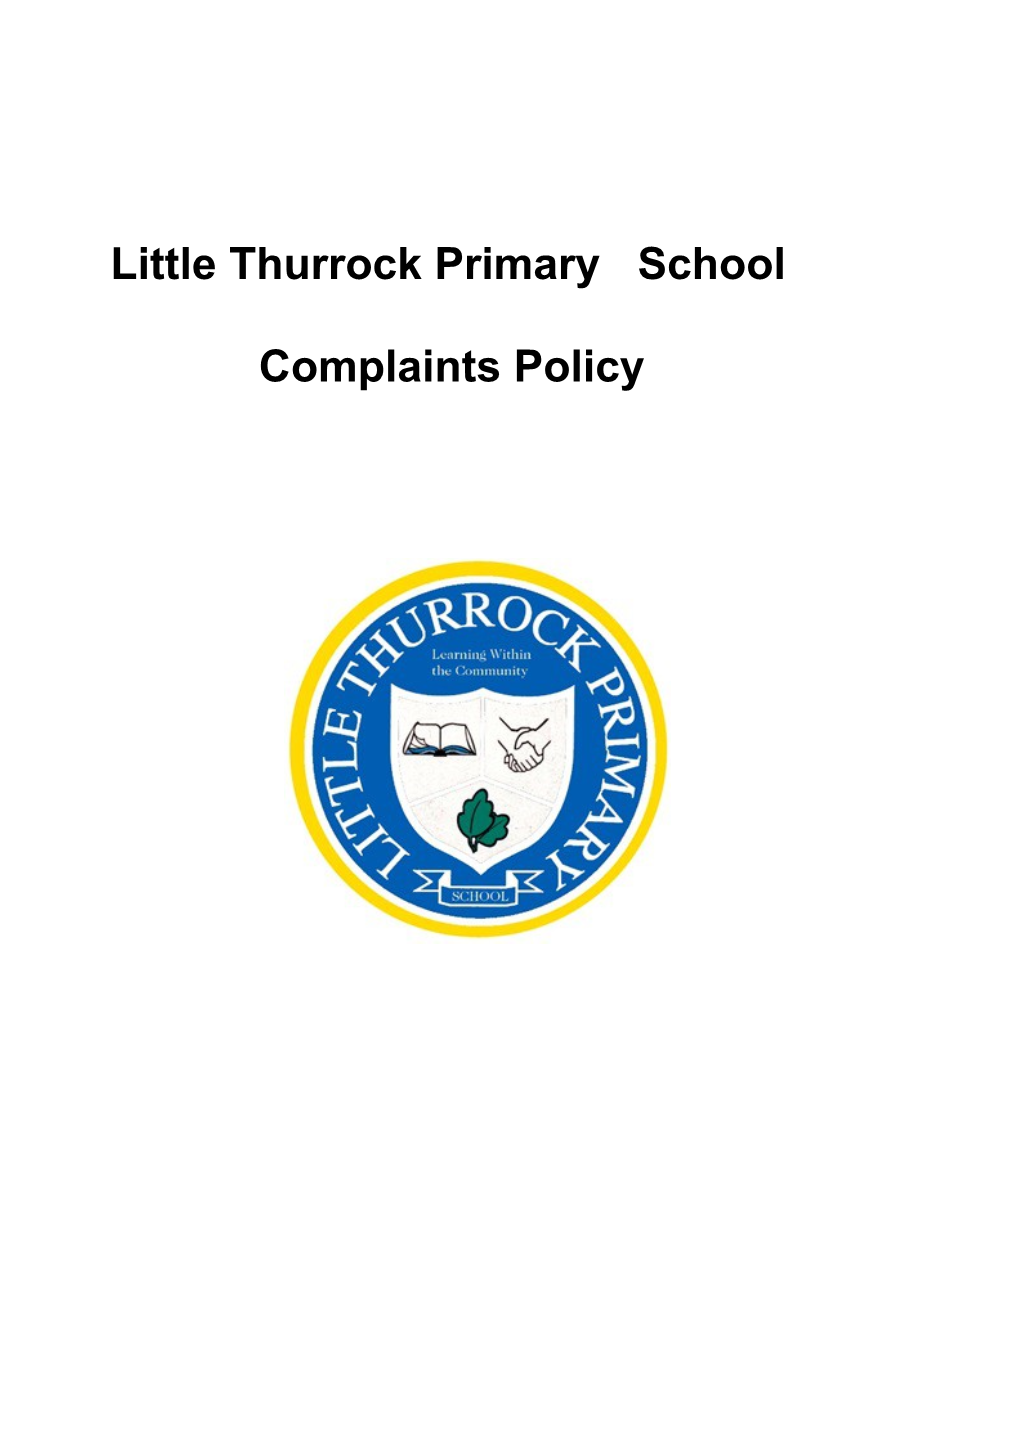 Little Thurrock Primary School